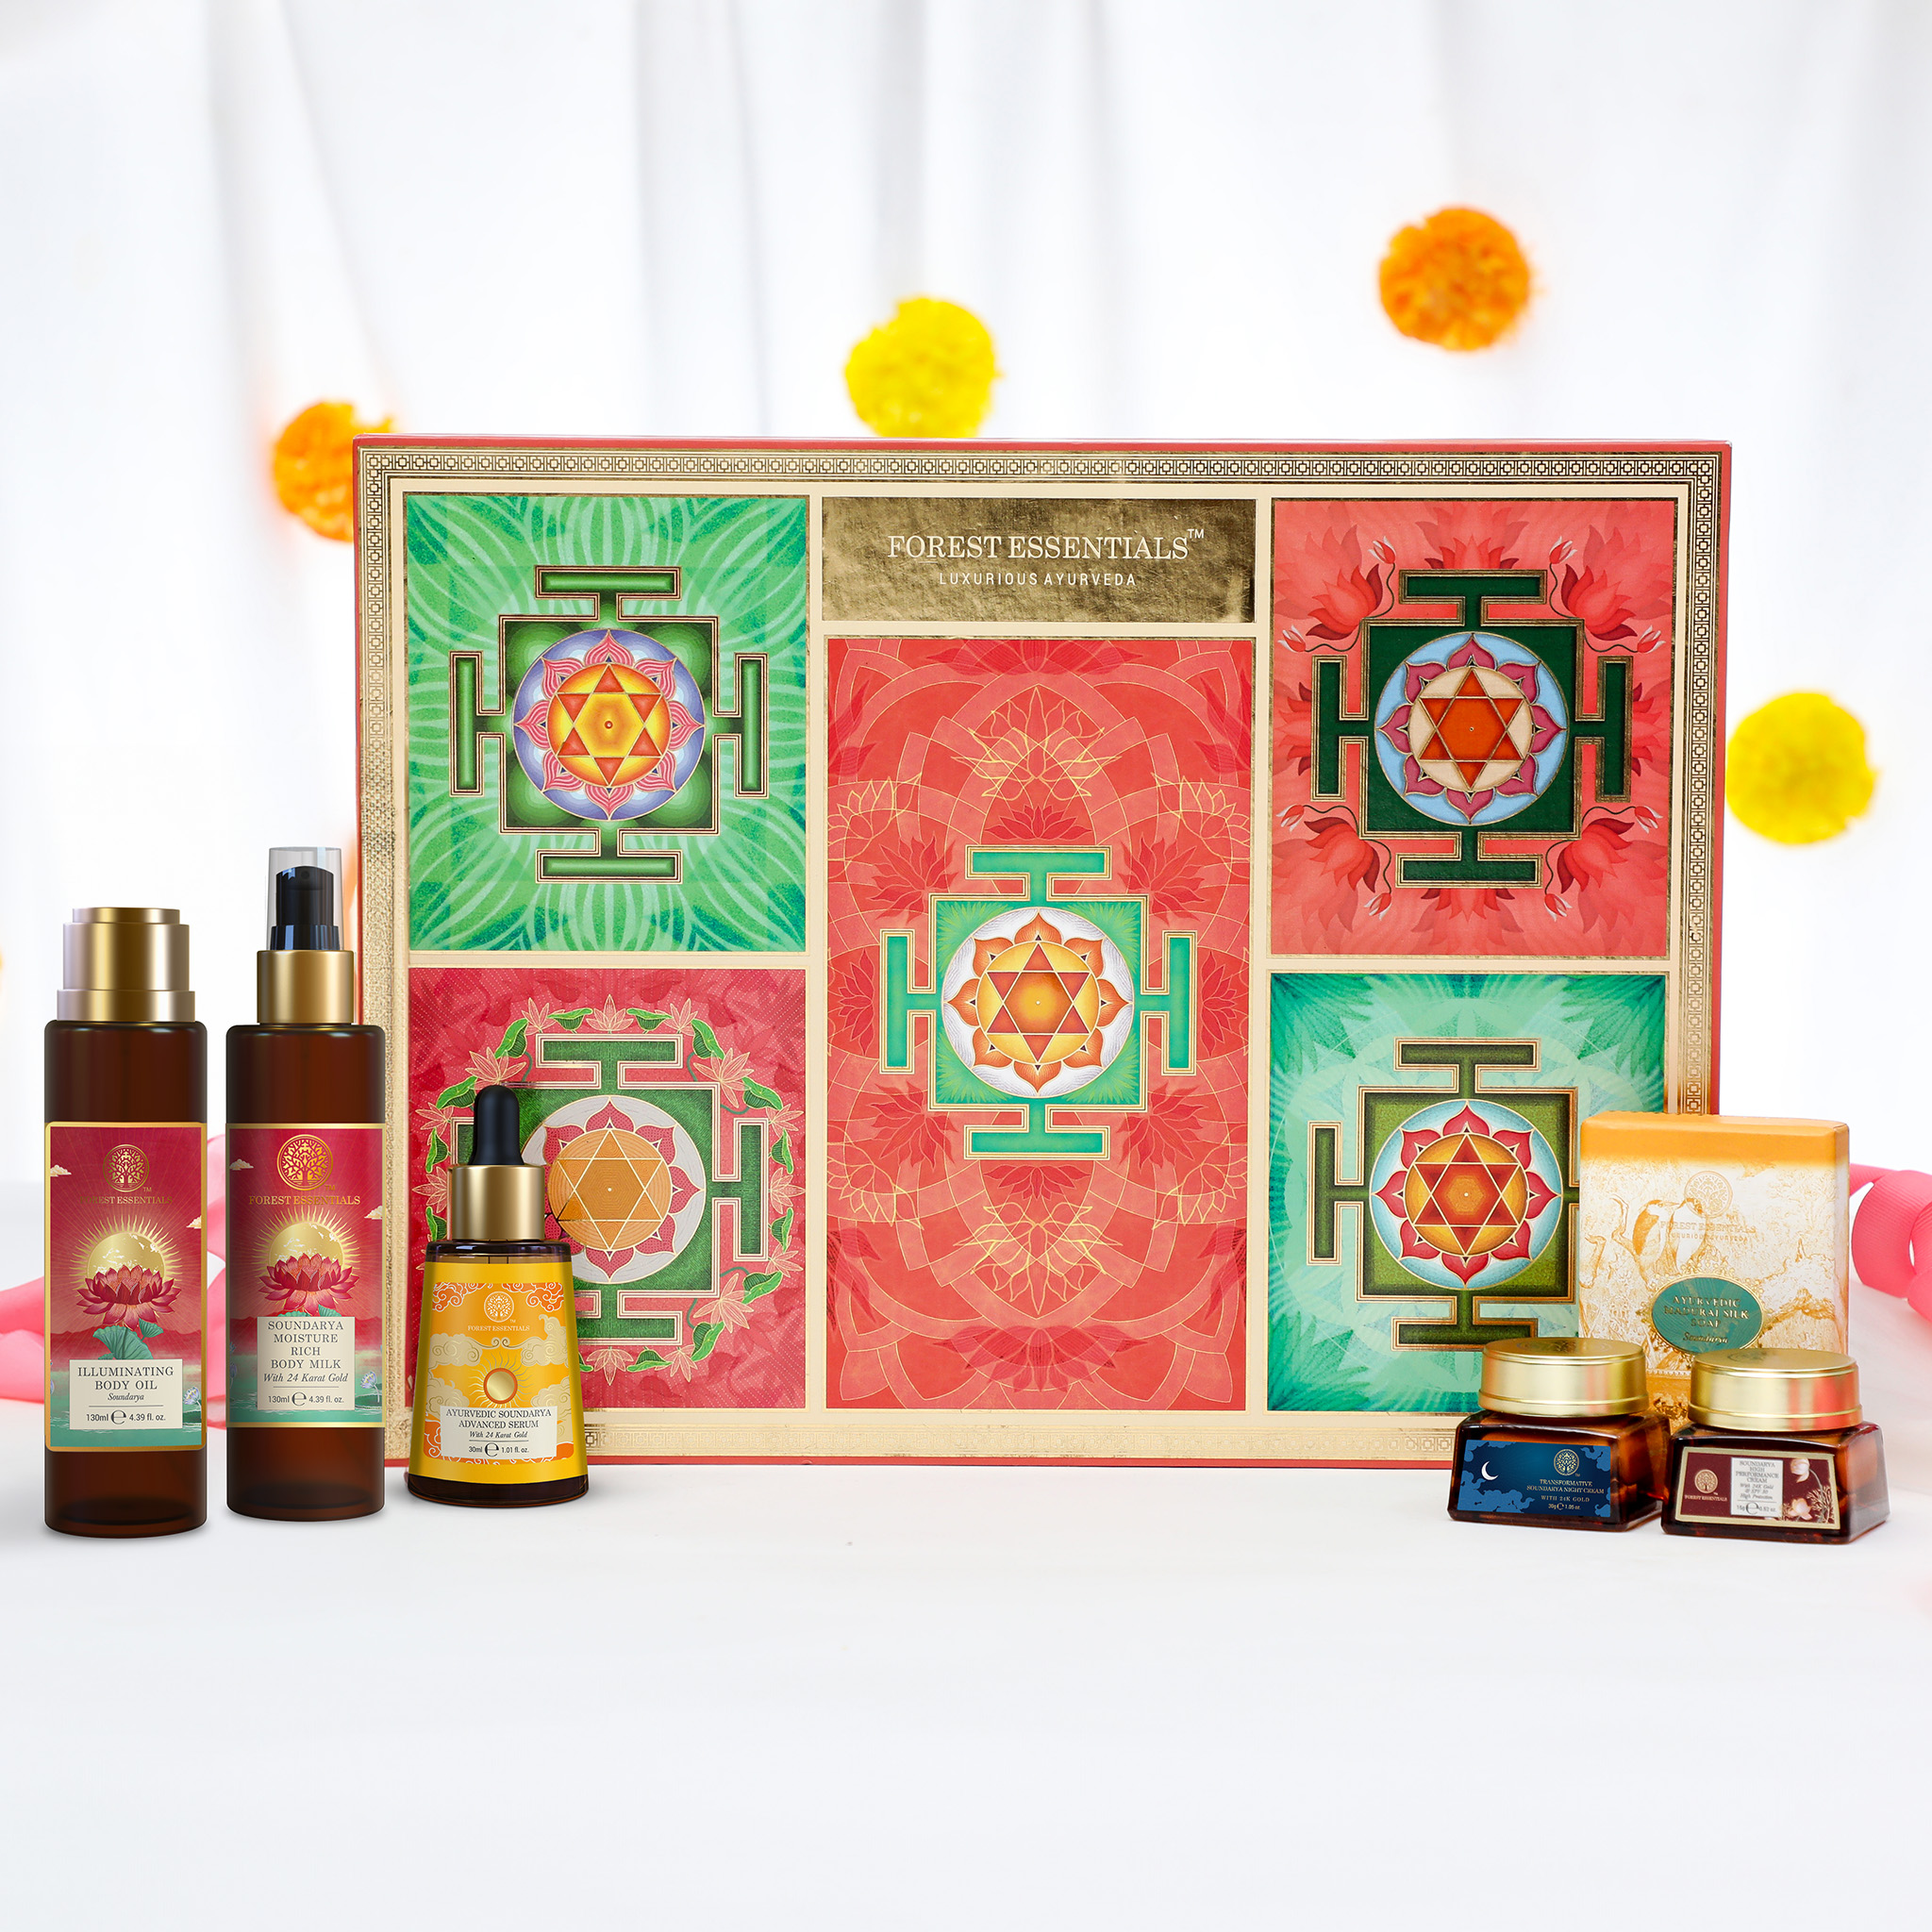 Forest Essentials Lakshmi Gift Box